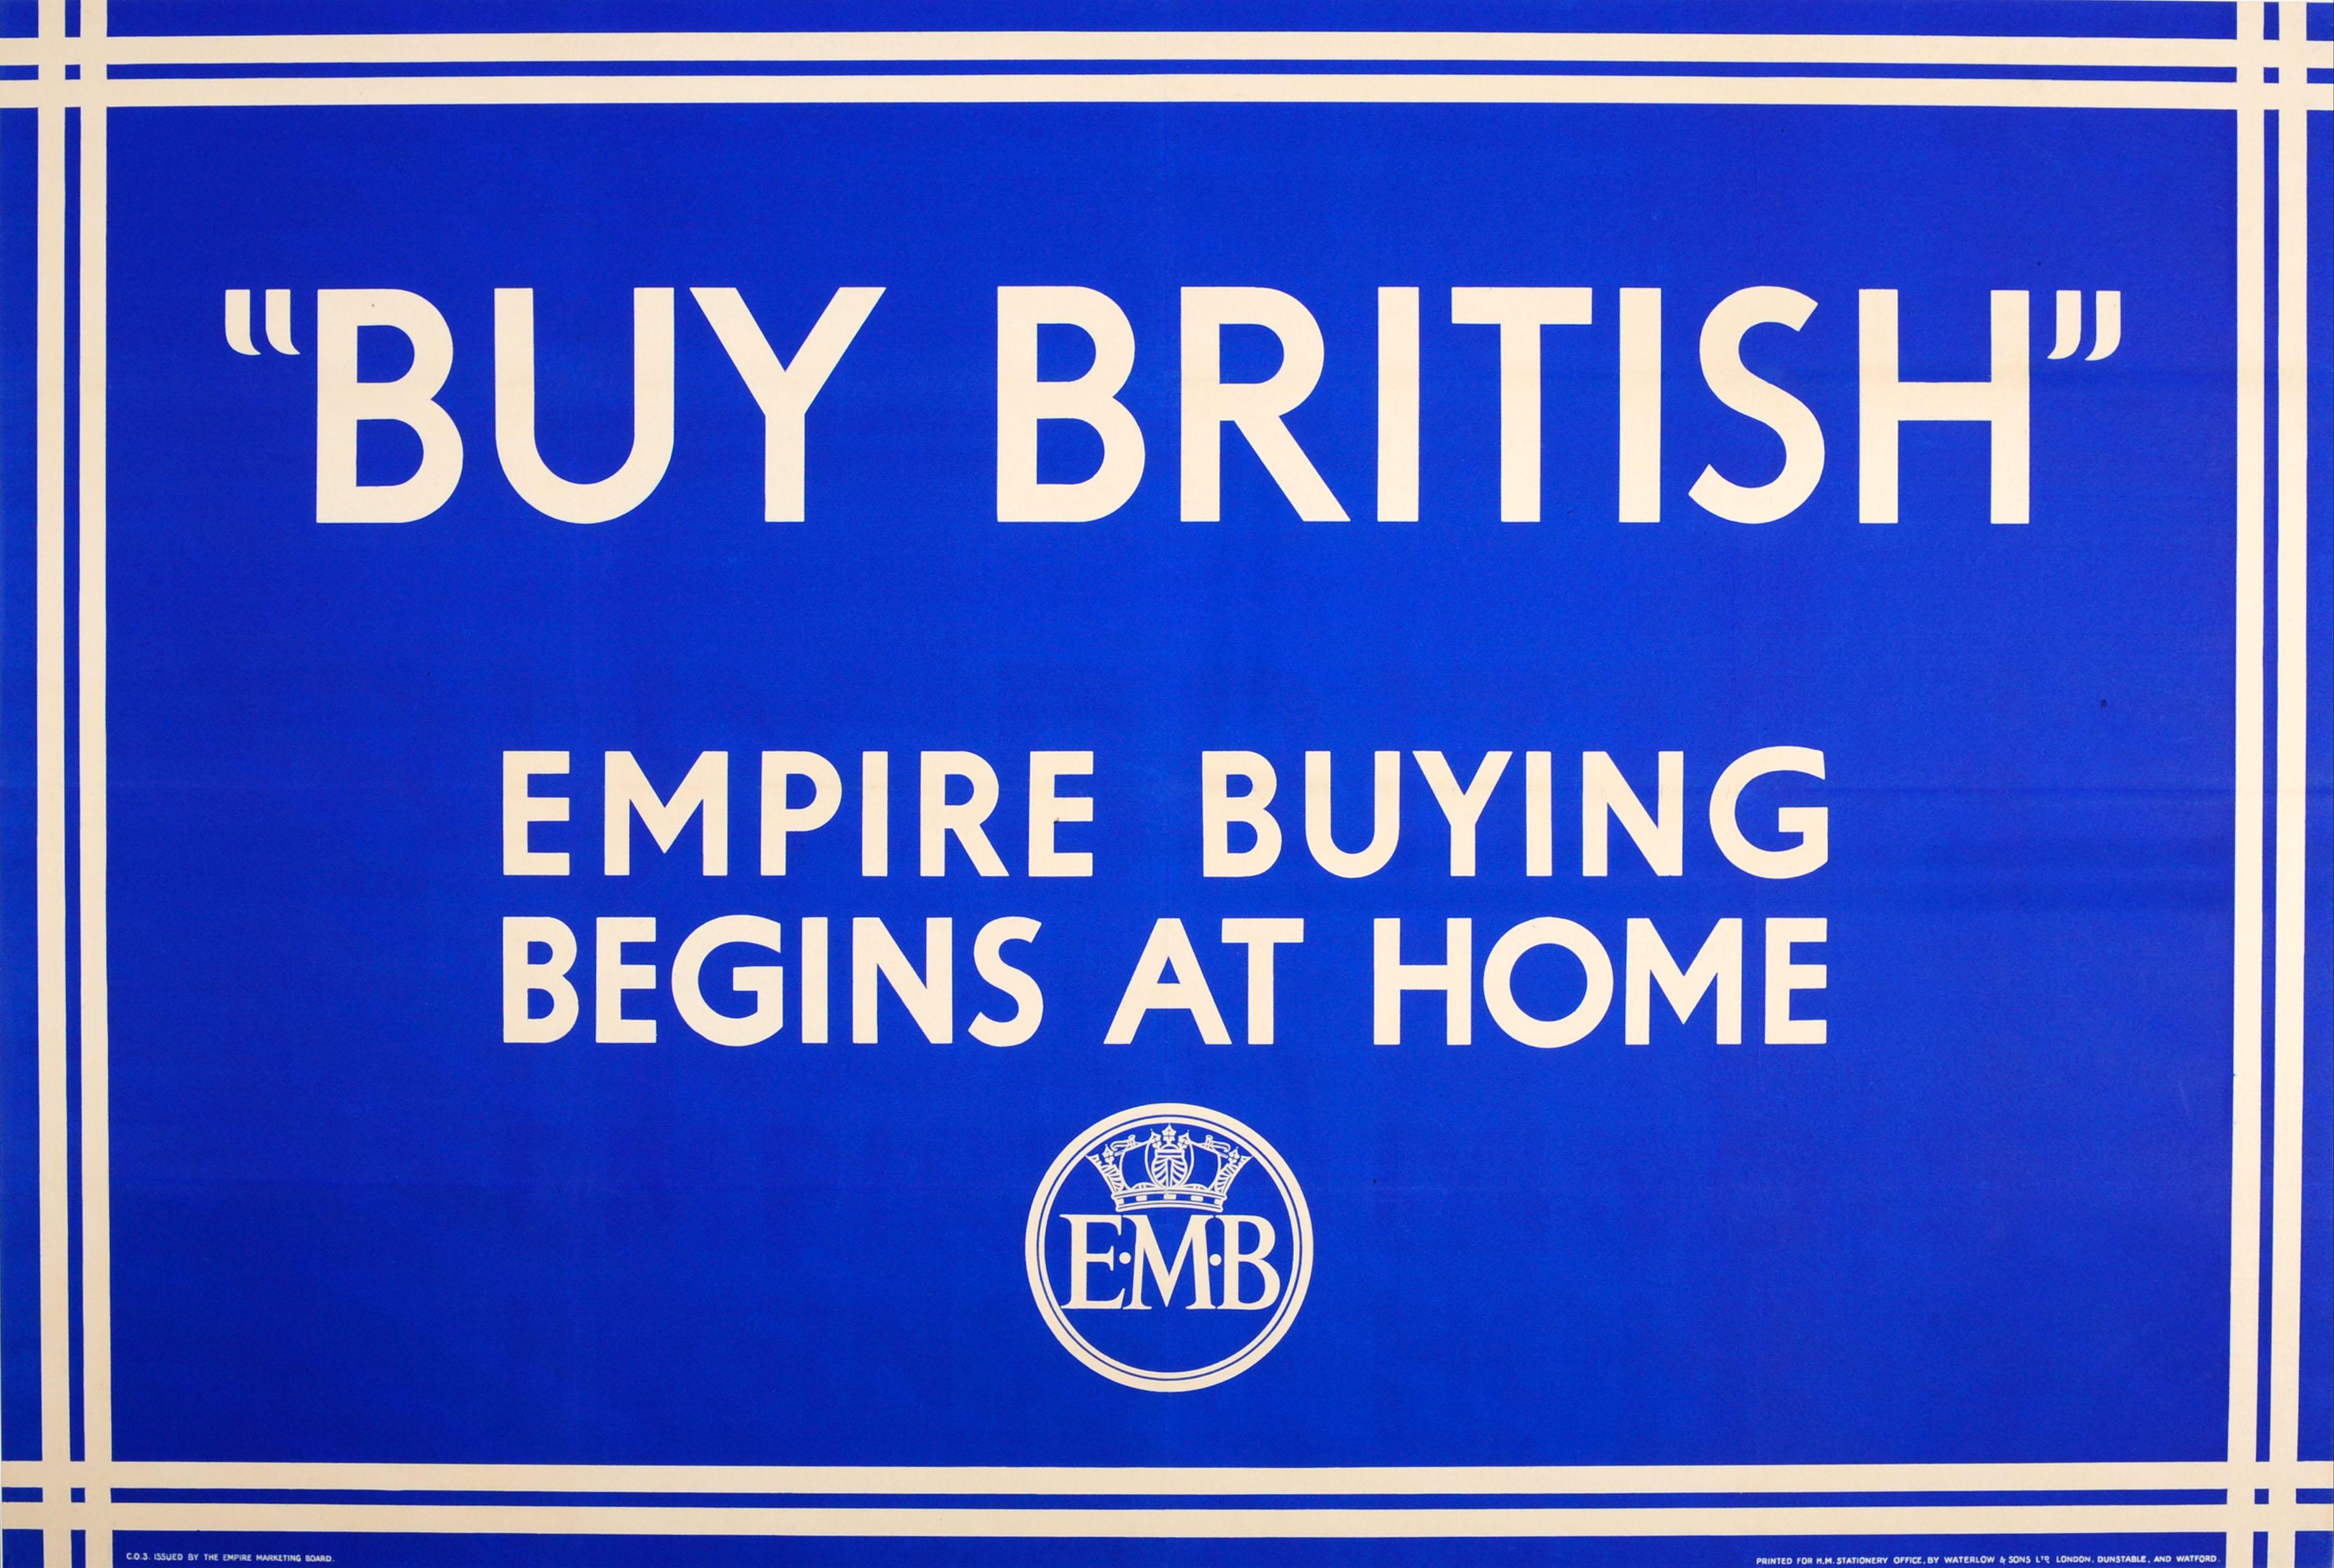 Unknown Print - Original Vintage Advertising Poster Buy British Empire Buying Begins At Home EMB